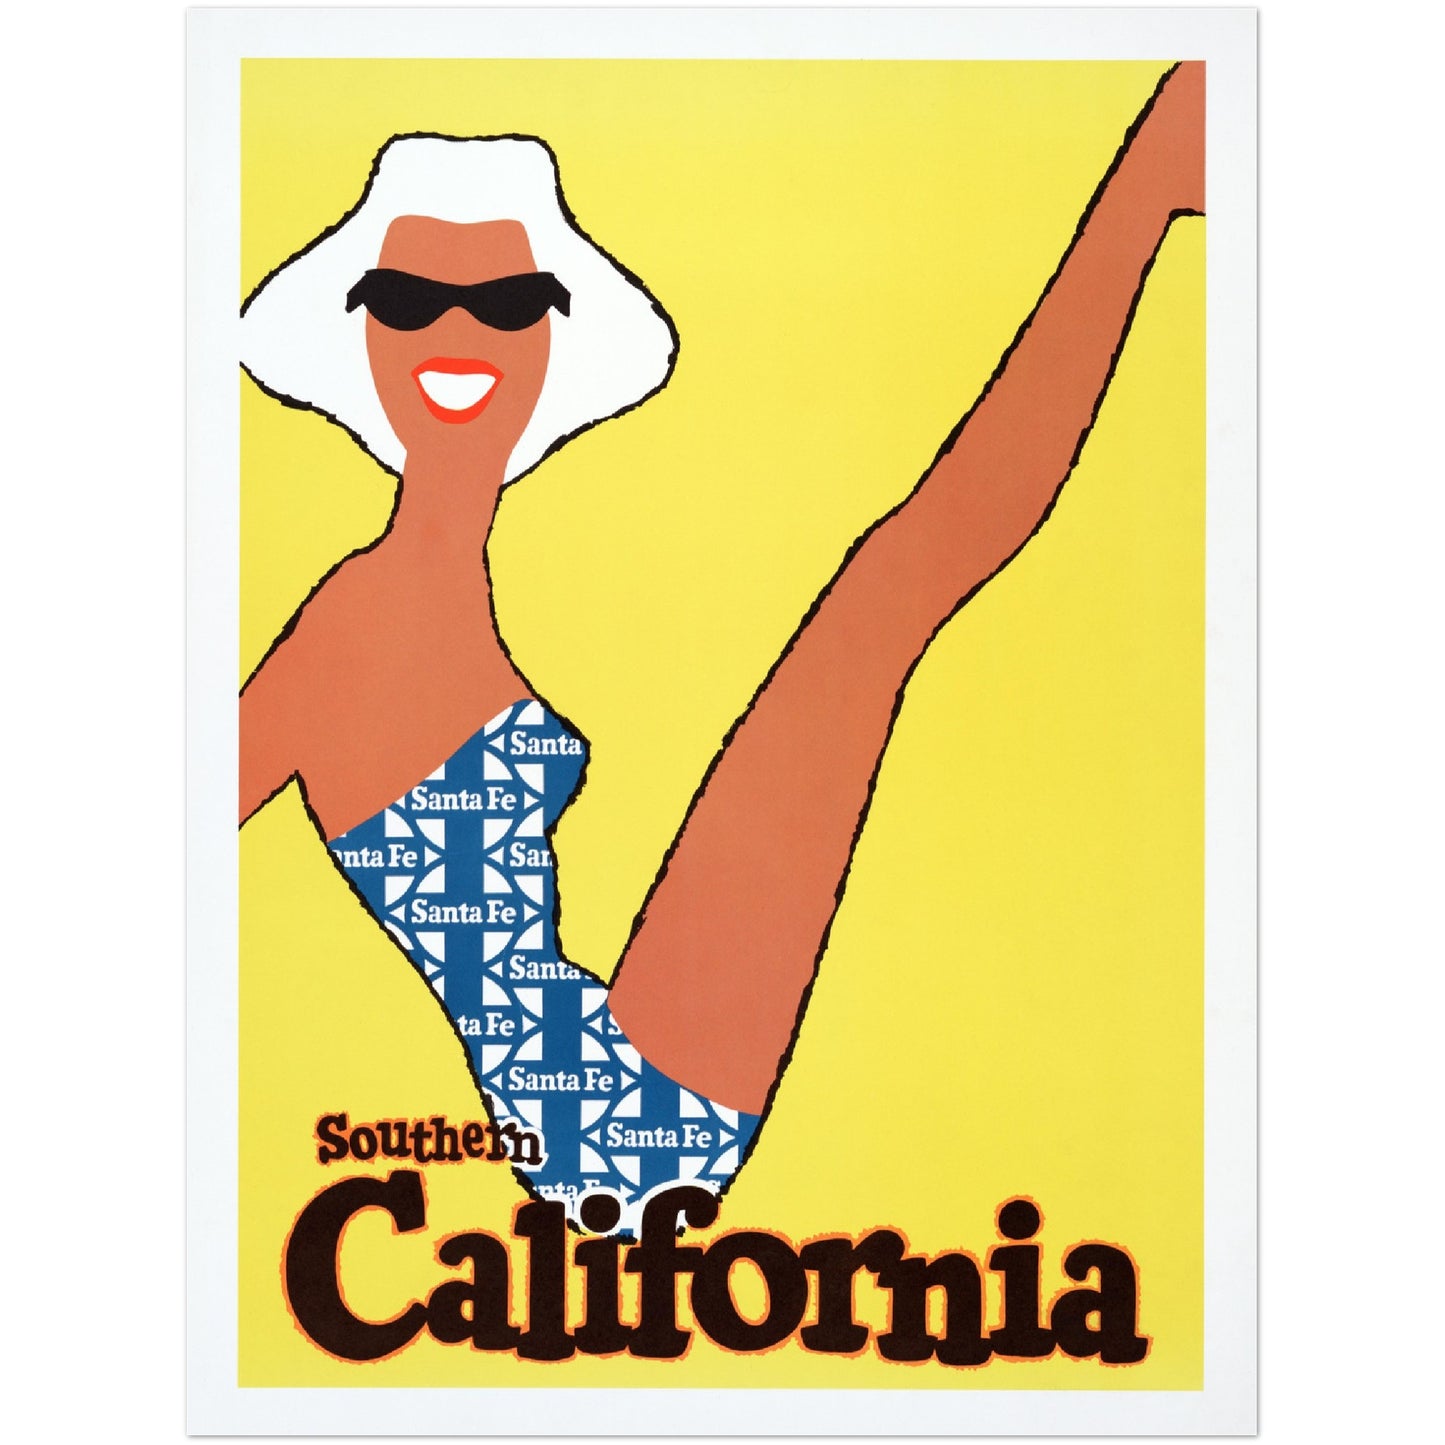 Poster - Southern California Girl in Santa Fe in Swimsuit (1963) Premium Matte Poster Paper